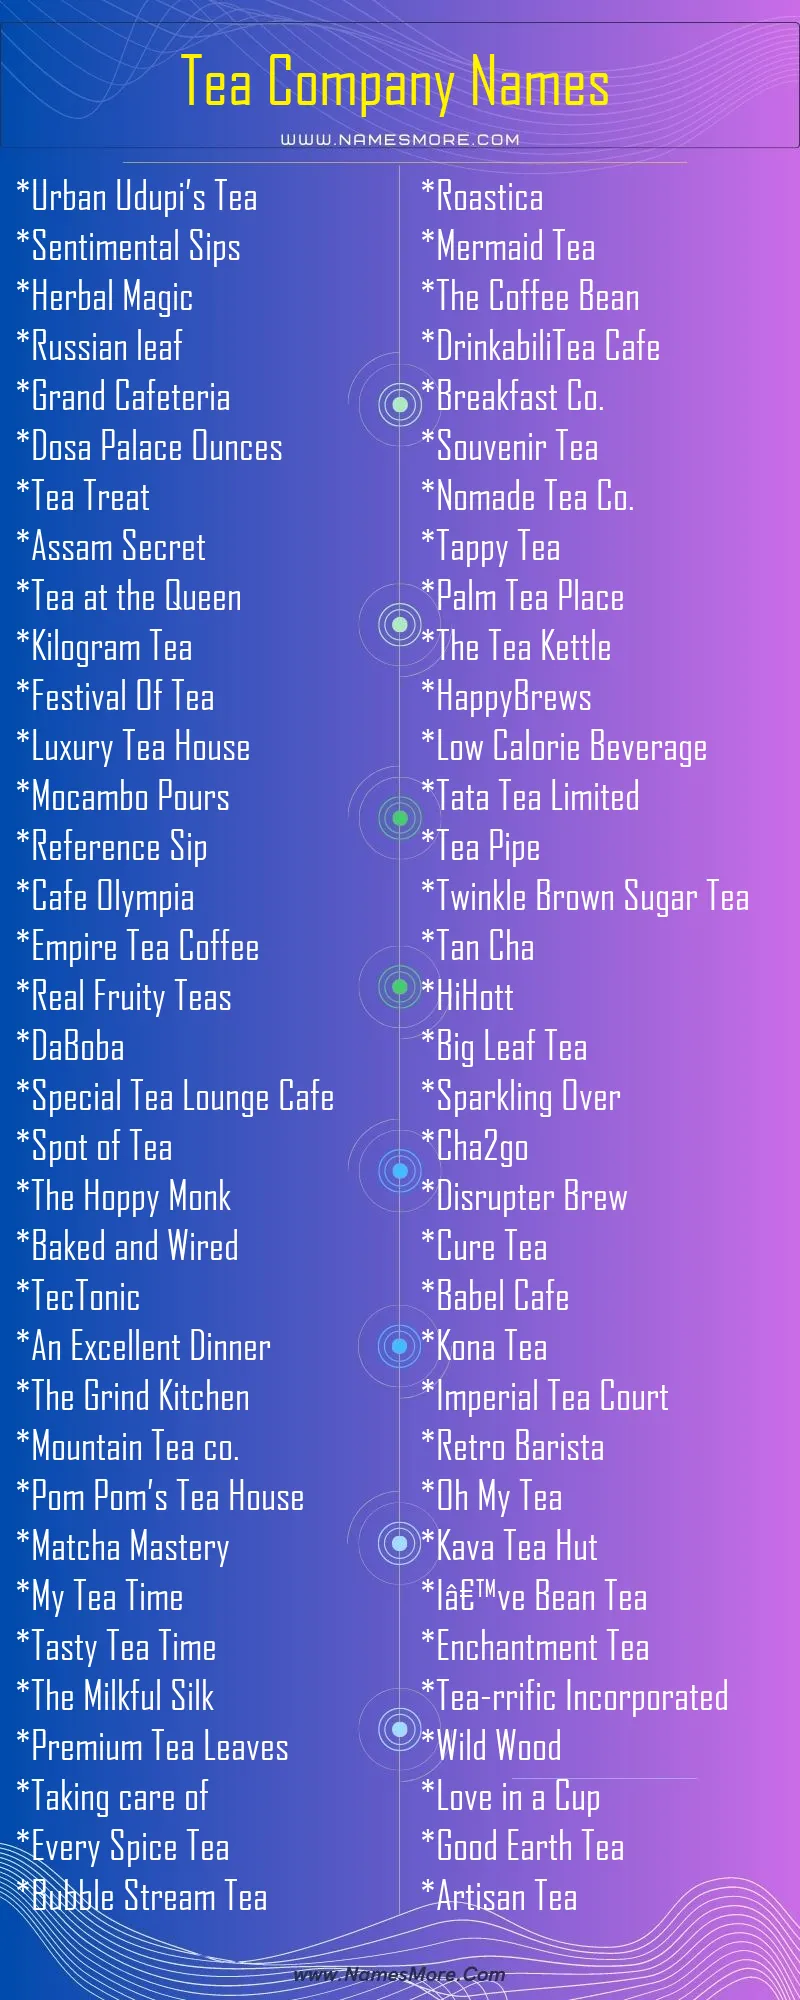 Tea Company Names List Infographic